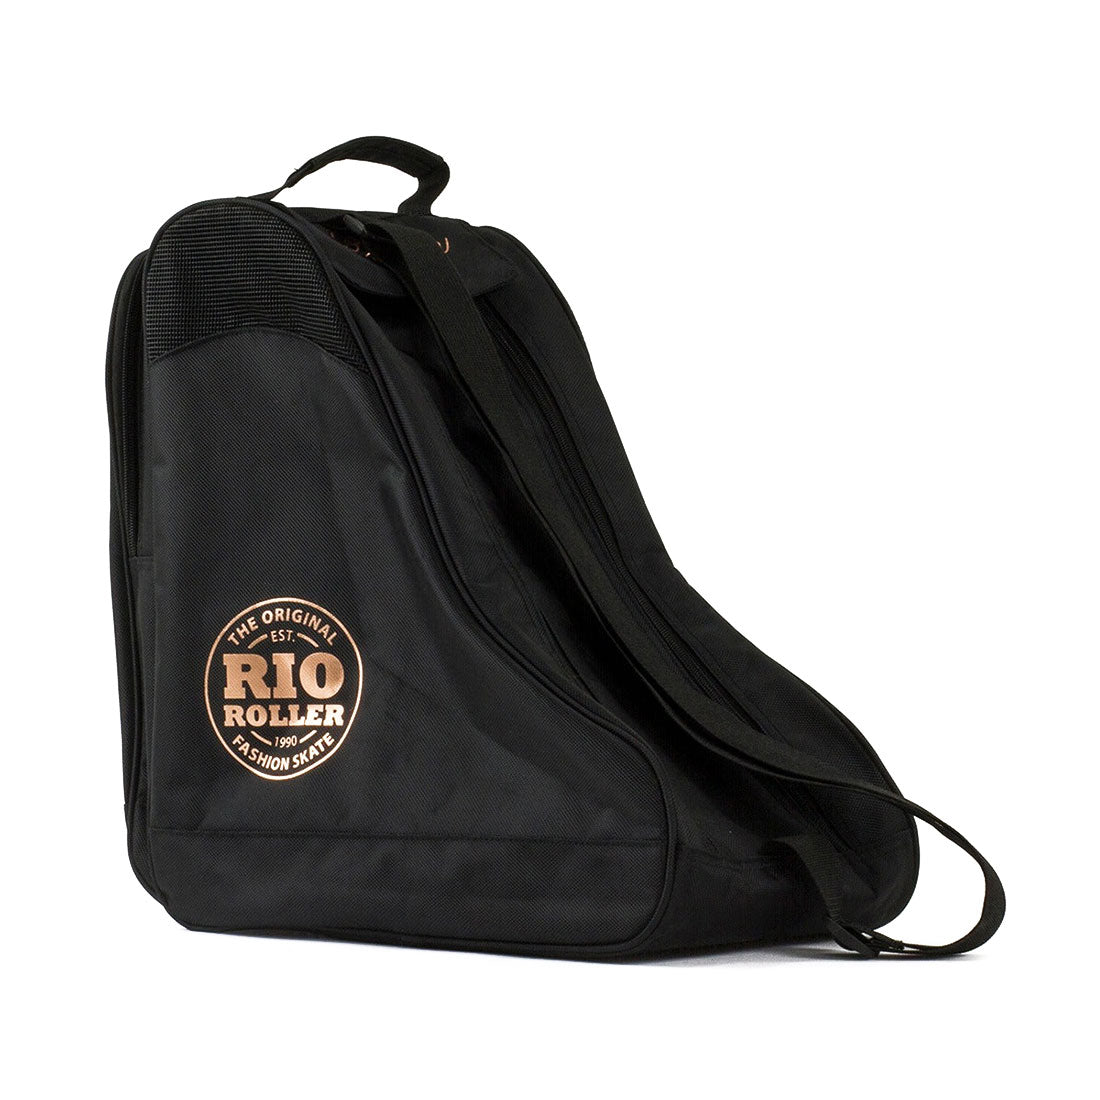 Rio Roller Skate Bag - Black/Rose Gold Bags and Backpacks